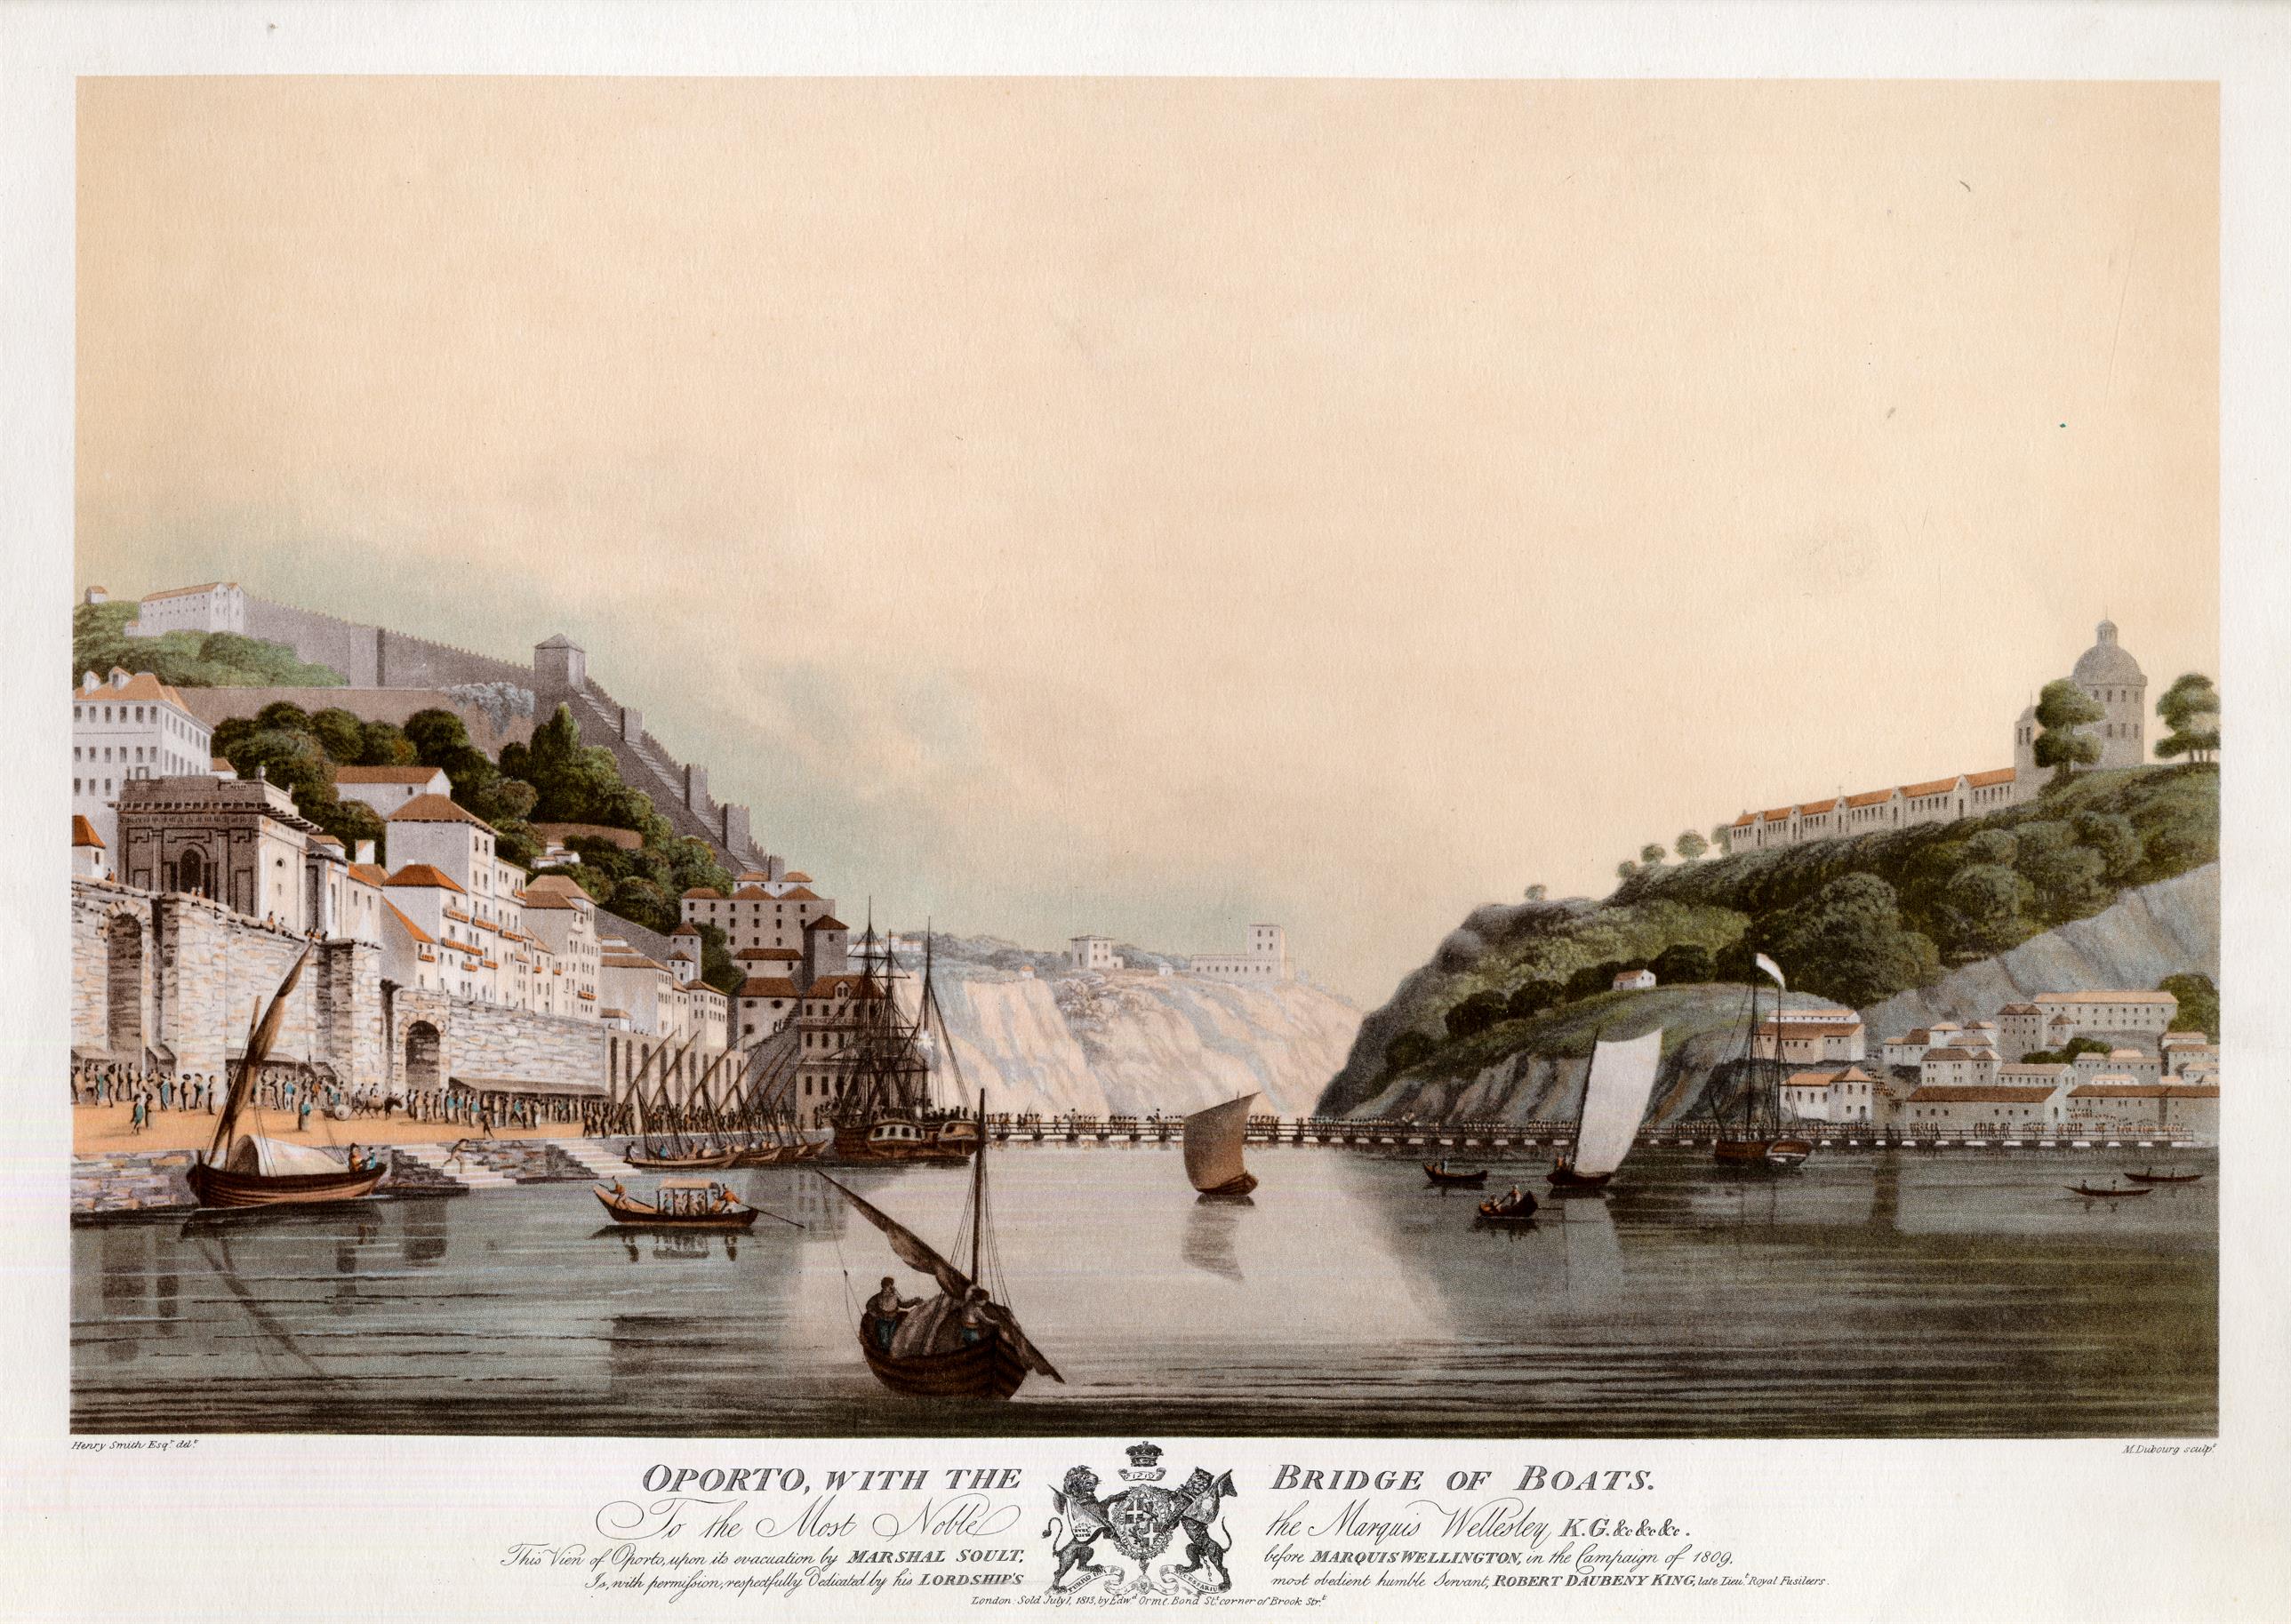 Oporto, with the bridge of boats